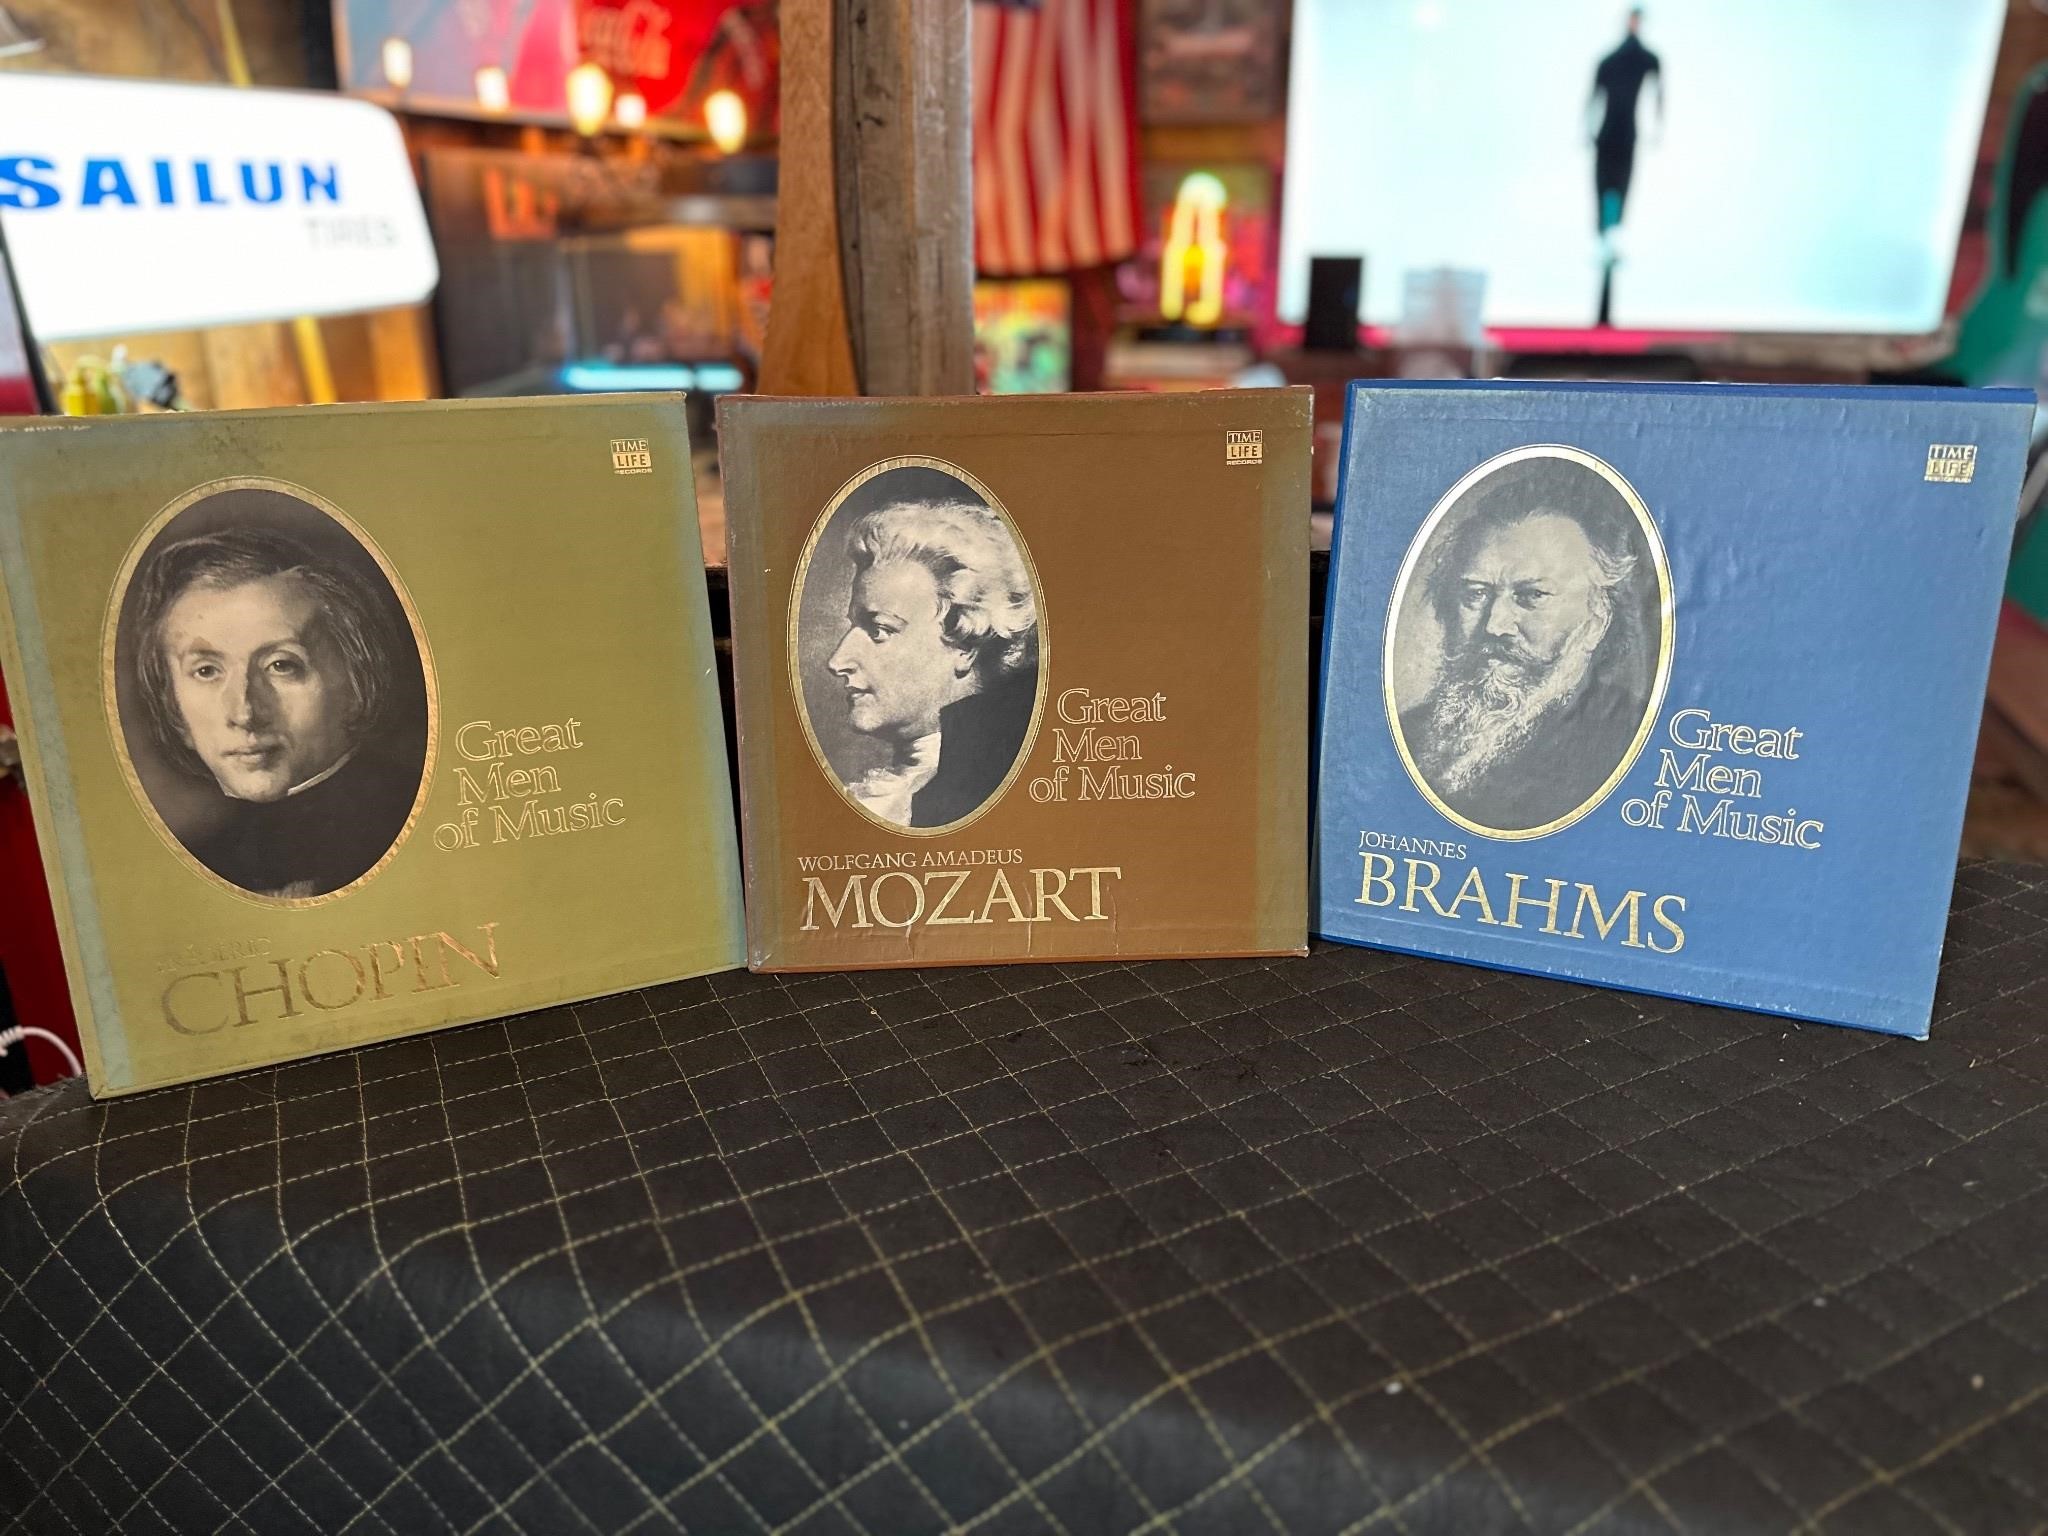 Chopin/Mozart/Brahm Records